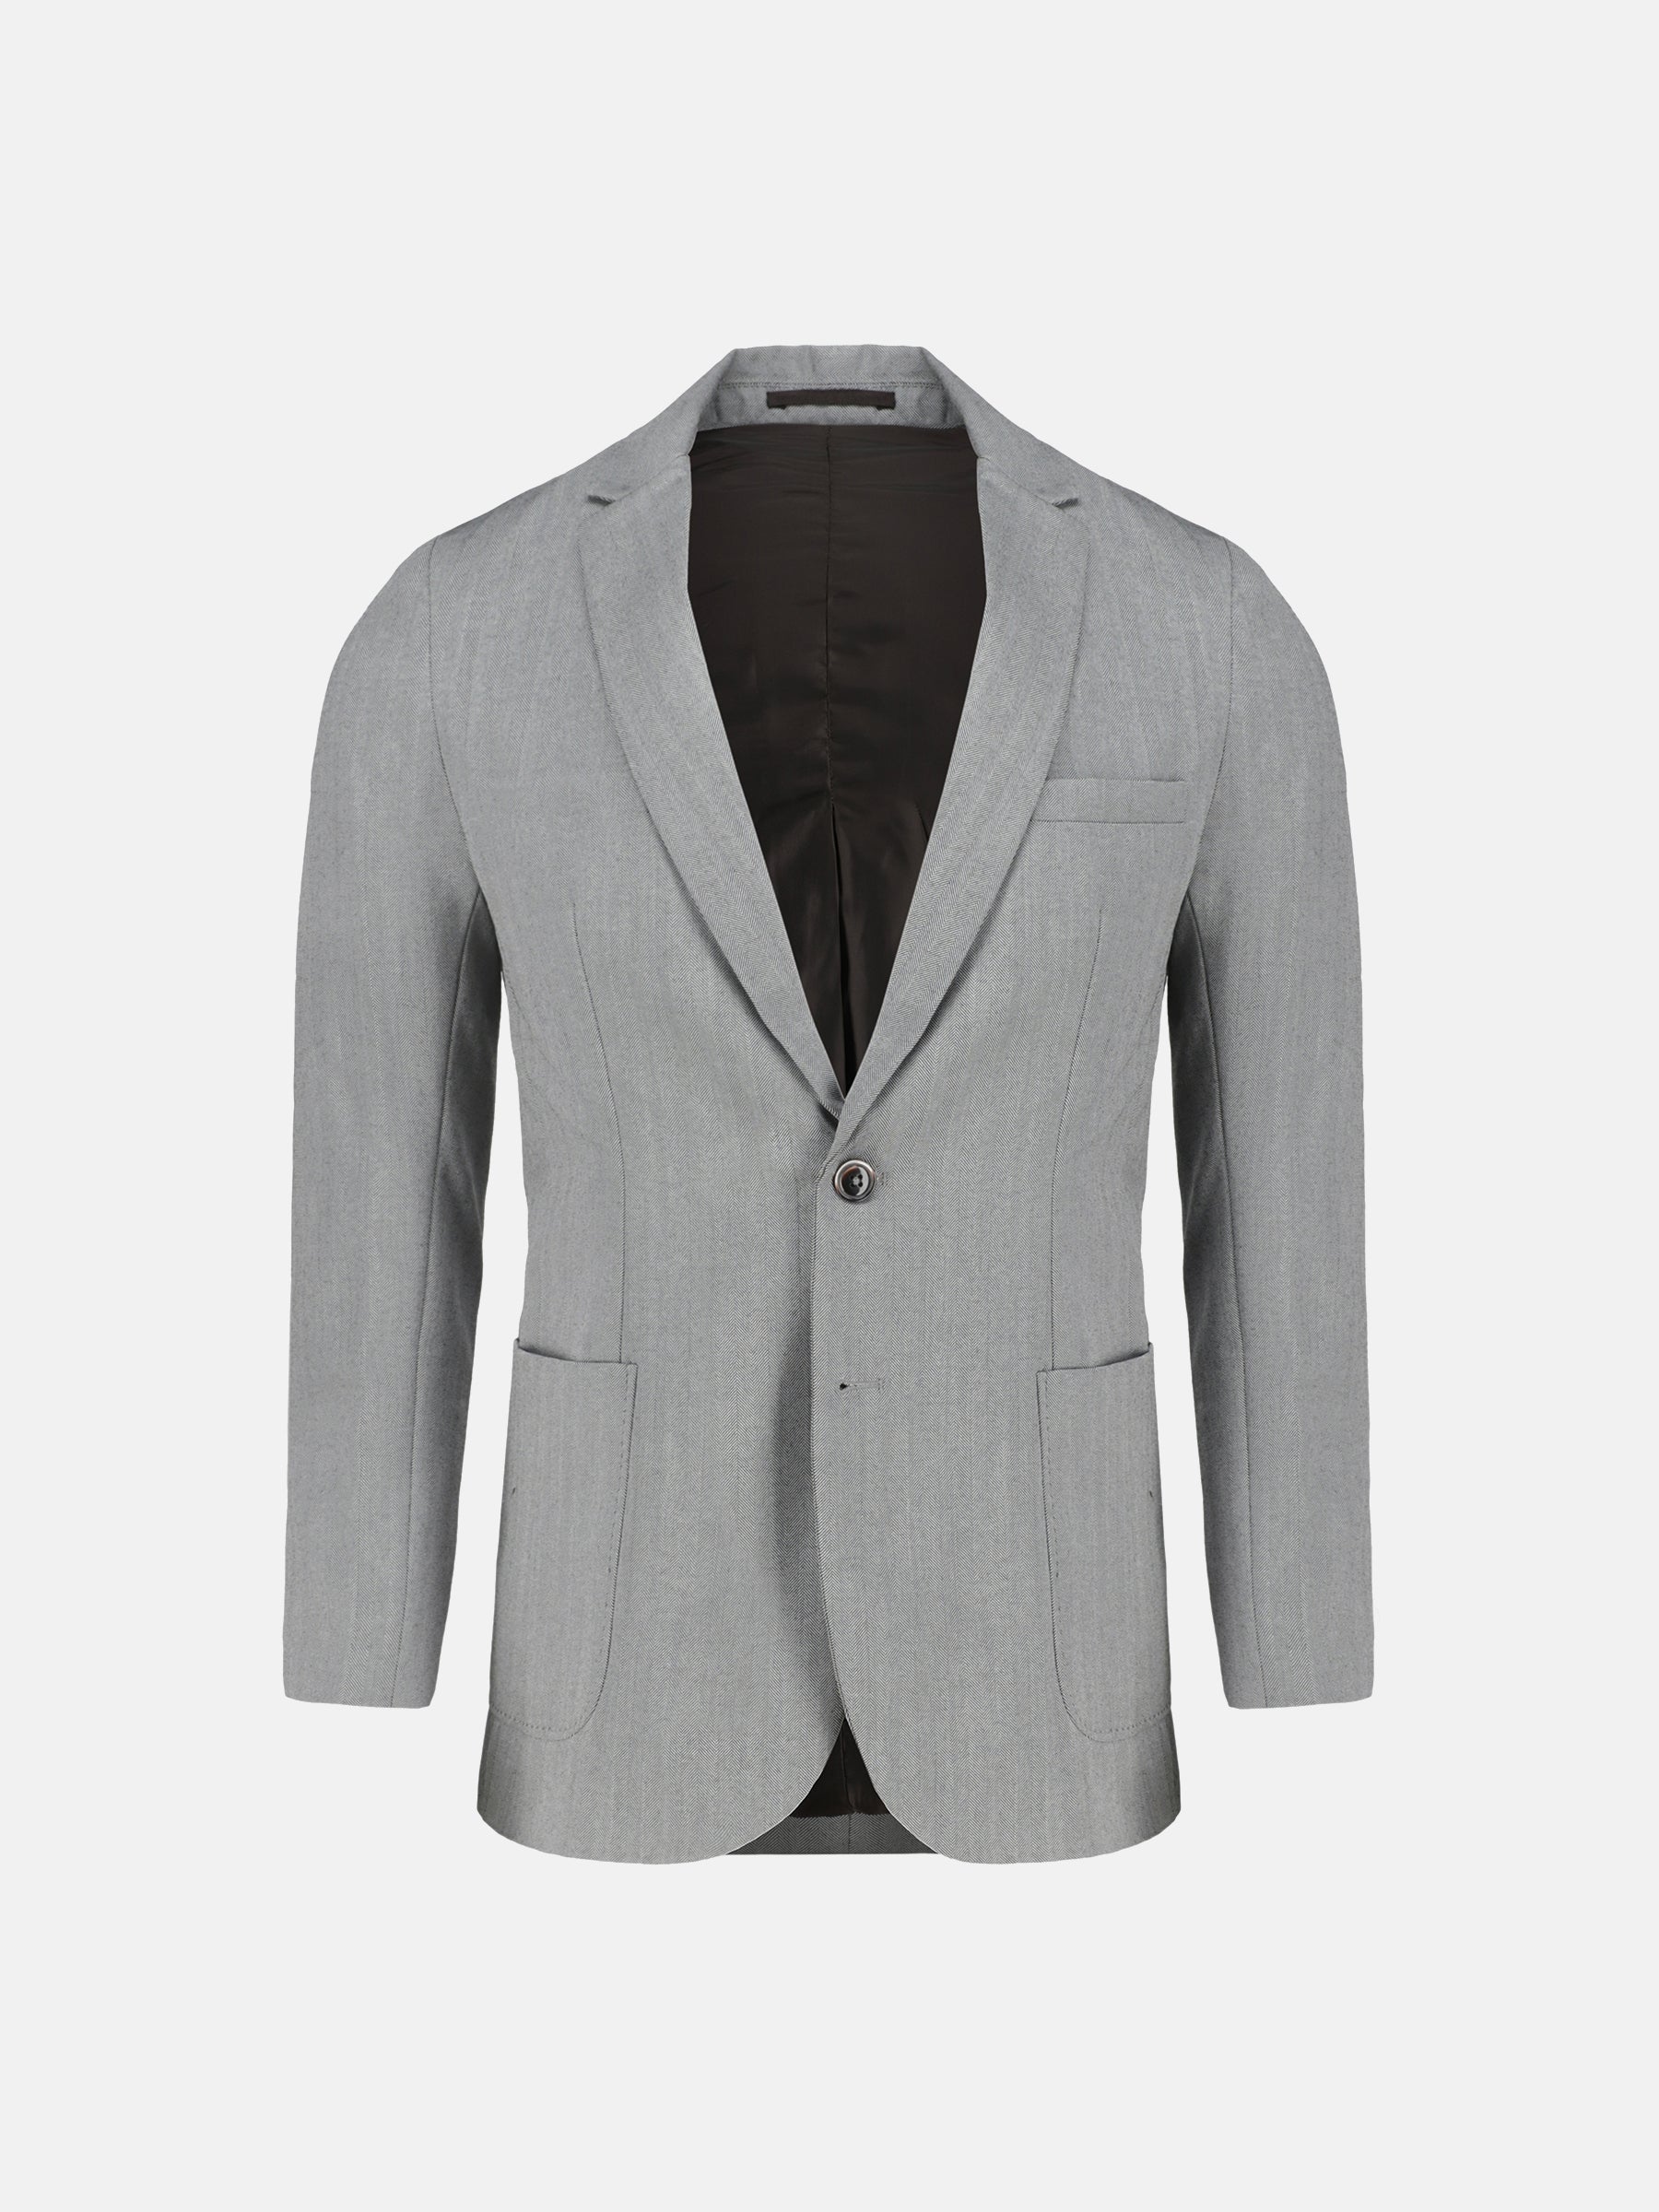 Grey Wool Herringbone Blazer For Mens - Brumano Menswear